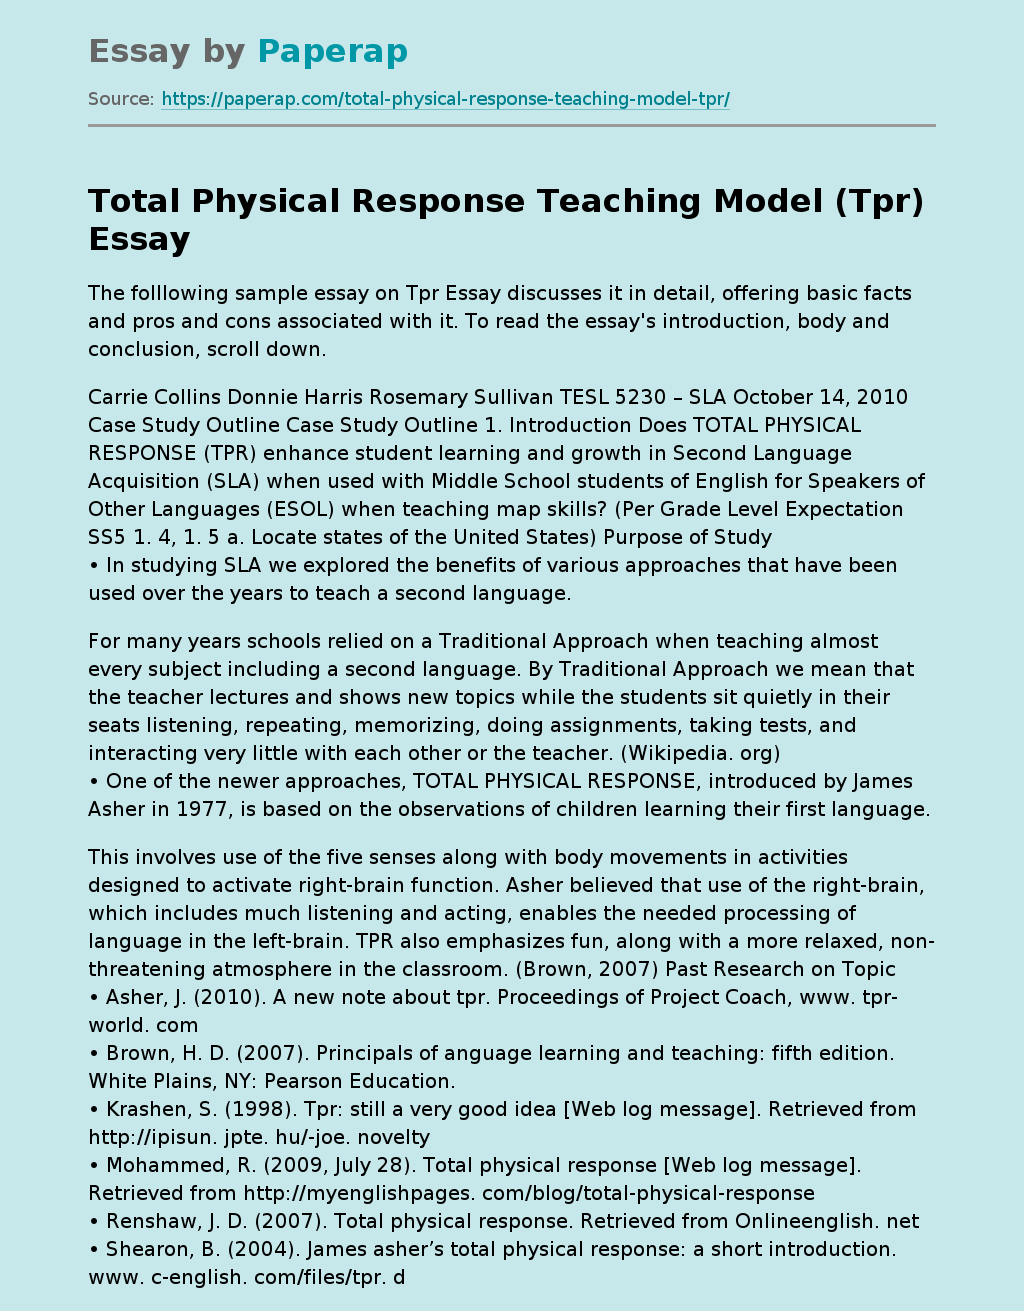 Total Physical Response Teaching Model (Tpr)